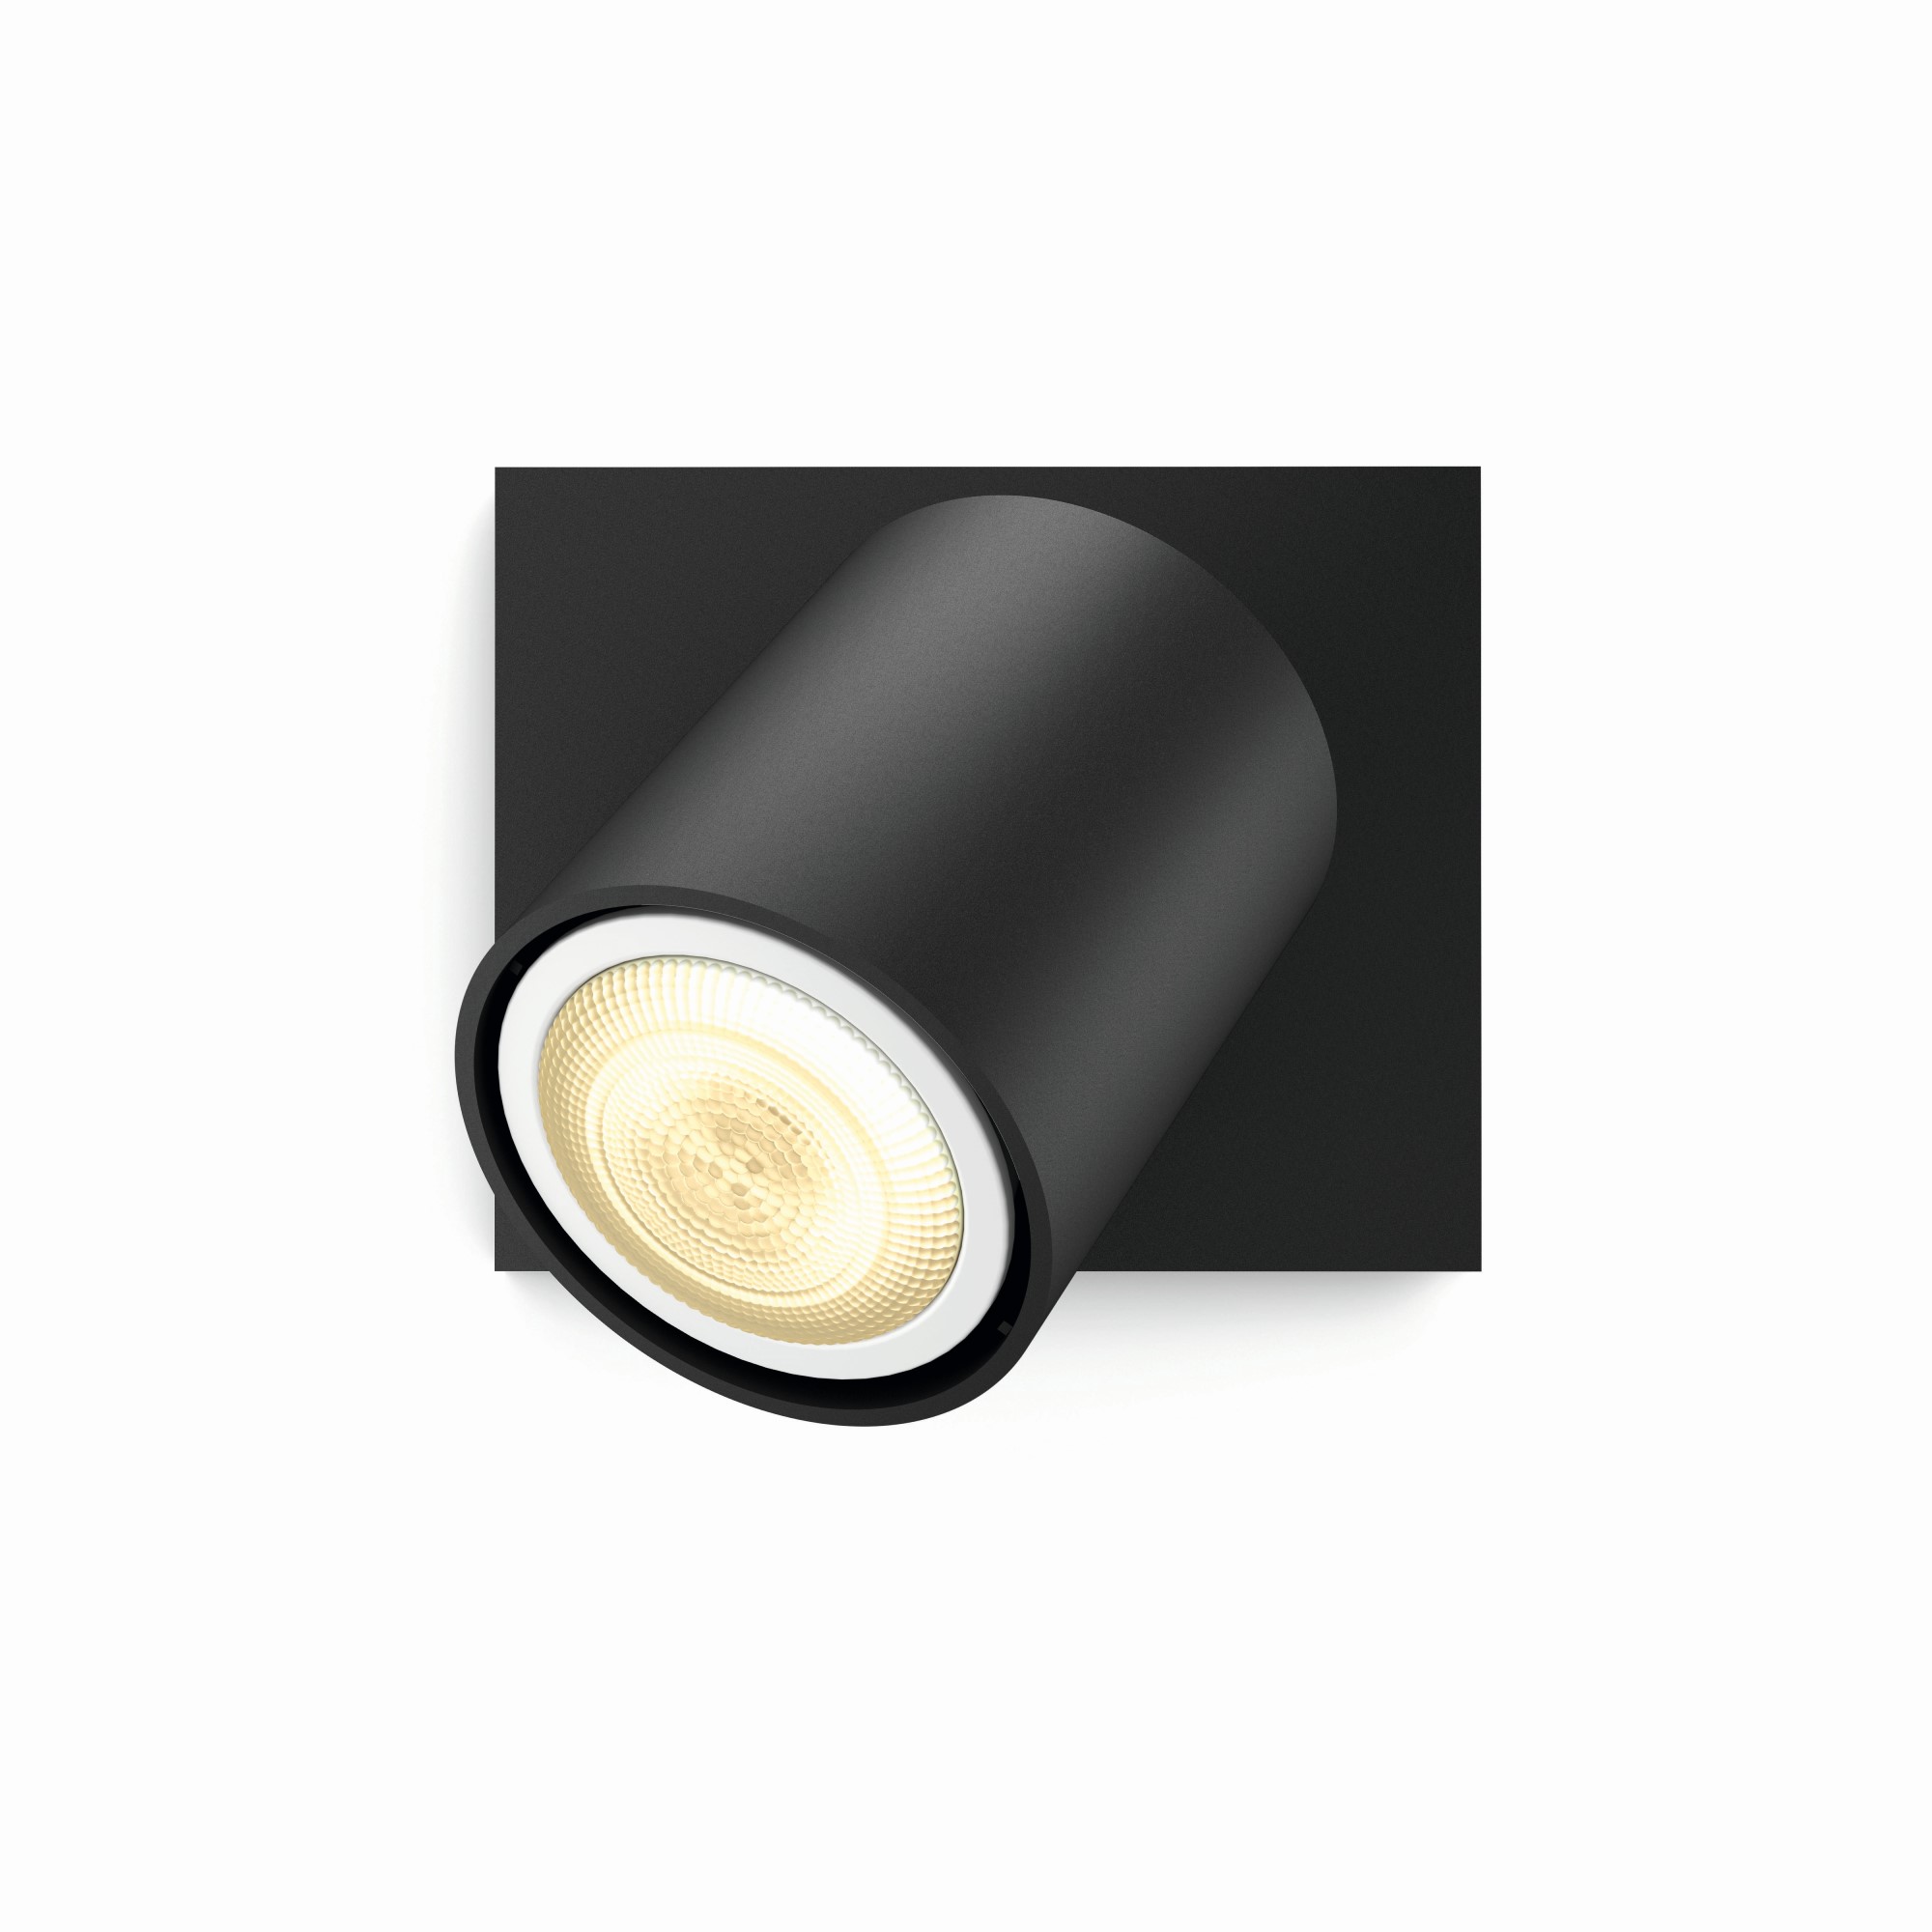 Philips Hue White Ambiance Runner LED Spot Light black 350lm incl. Dimmer Switch